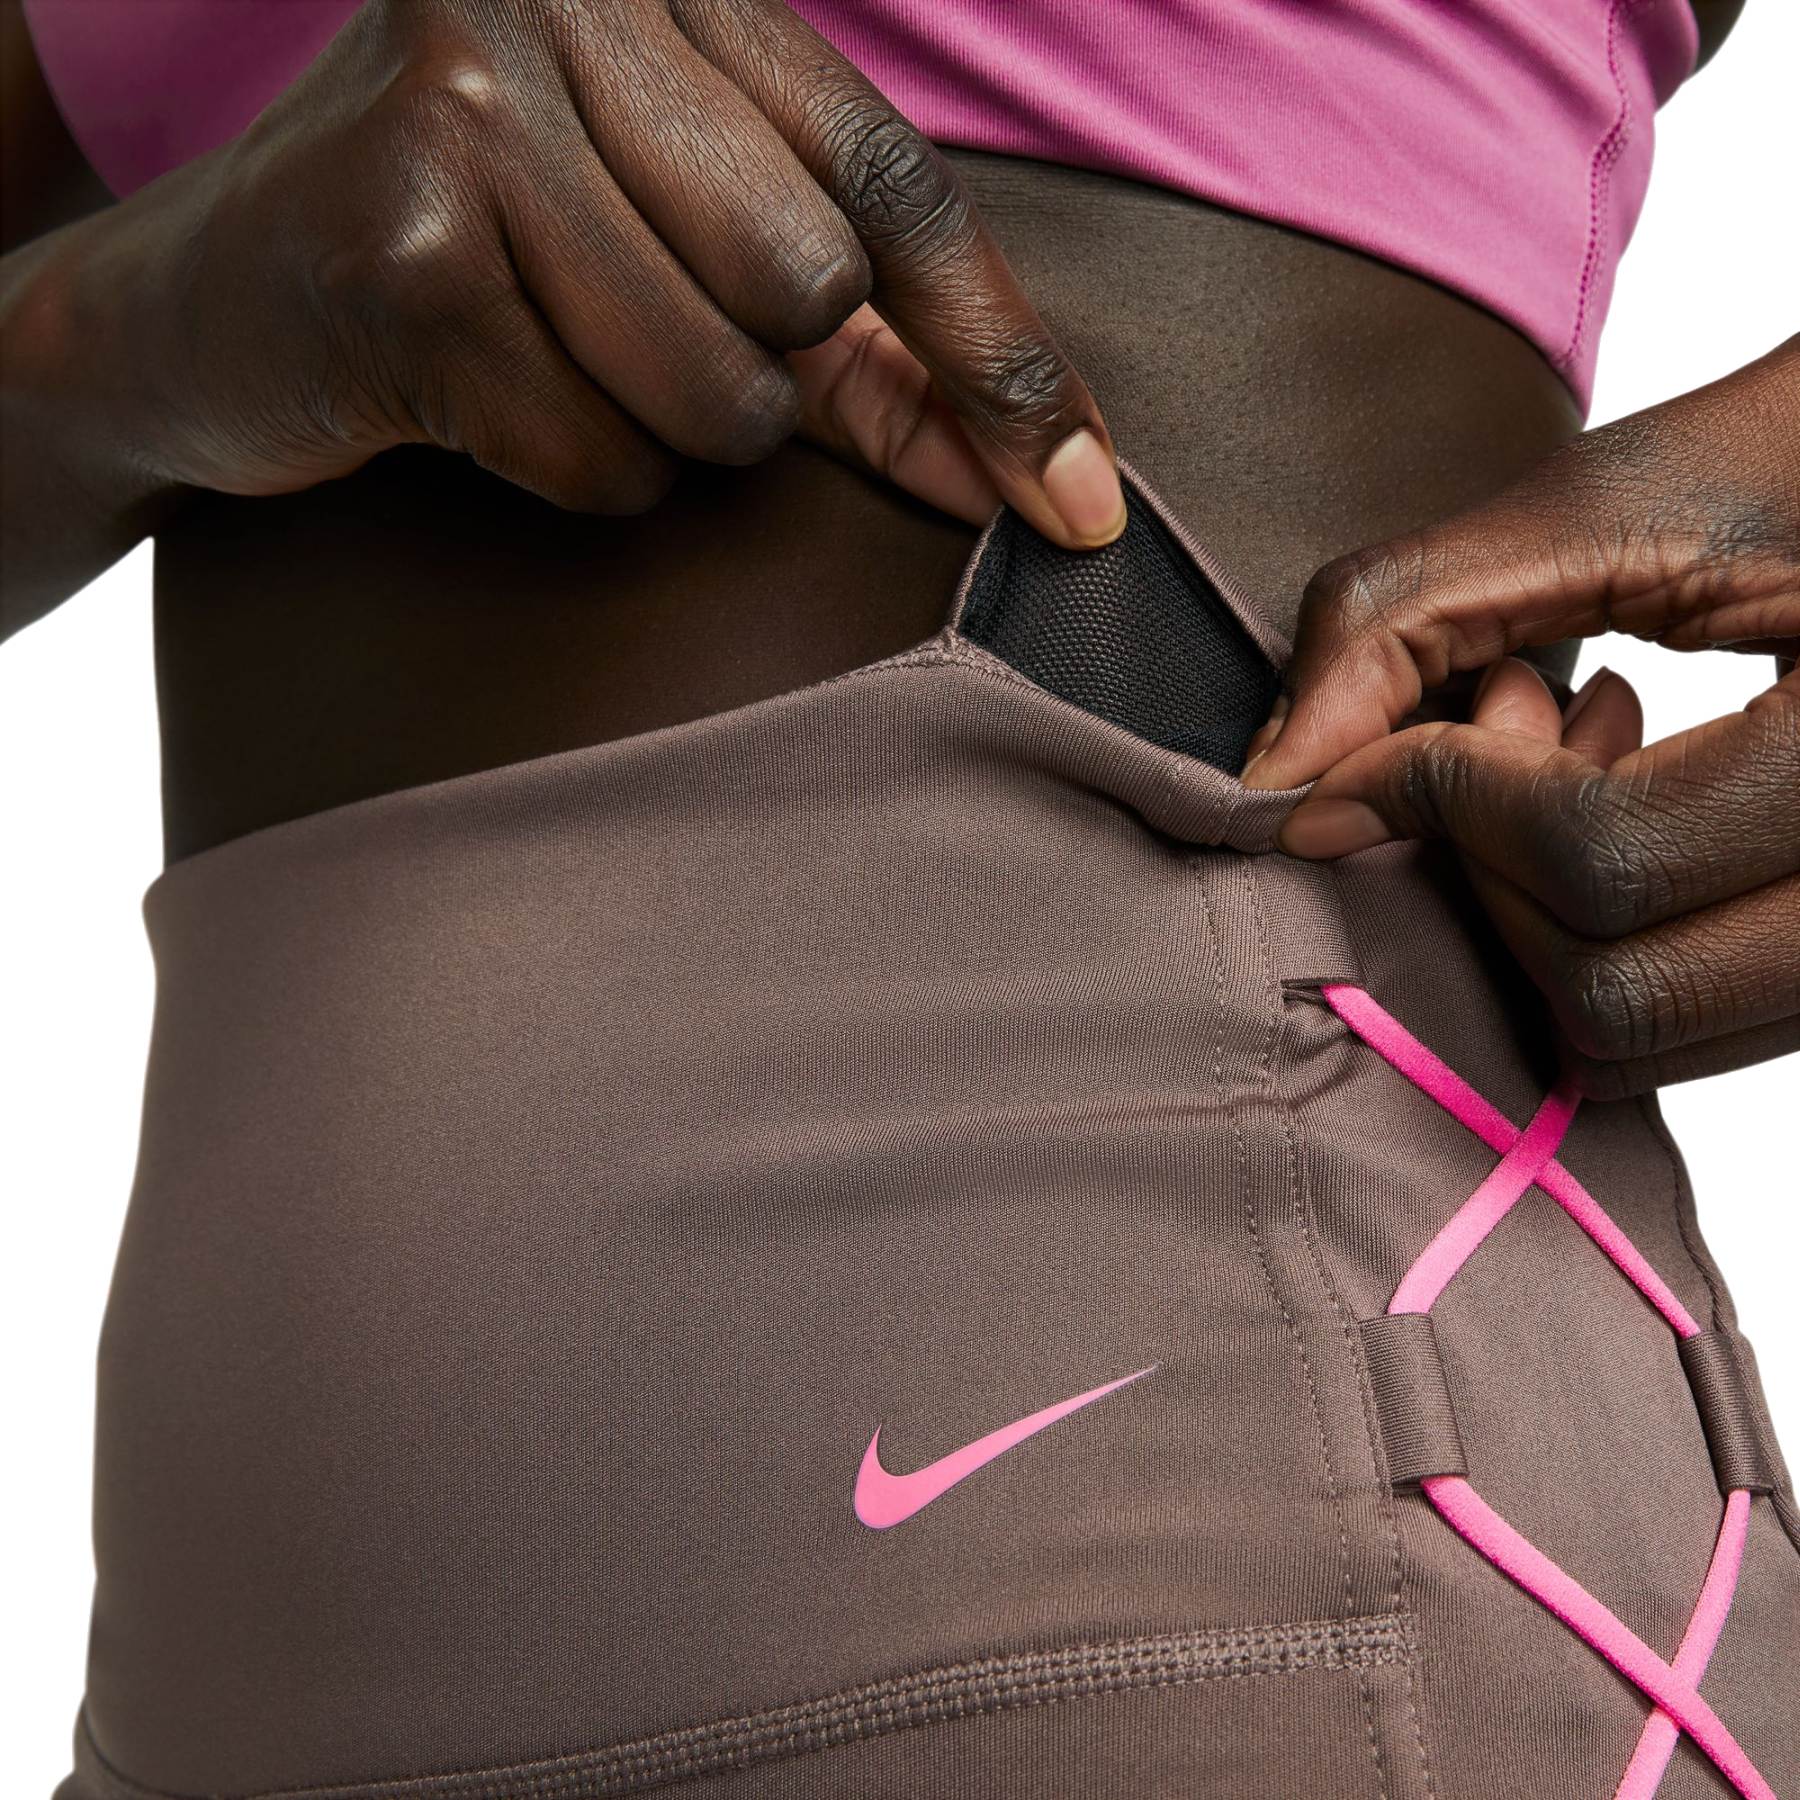 Nike One Dri-FIT Women's High-Rise Leggings - Pink